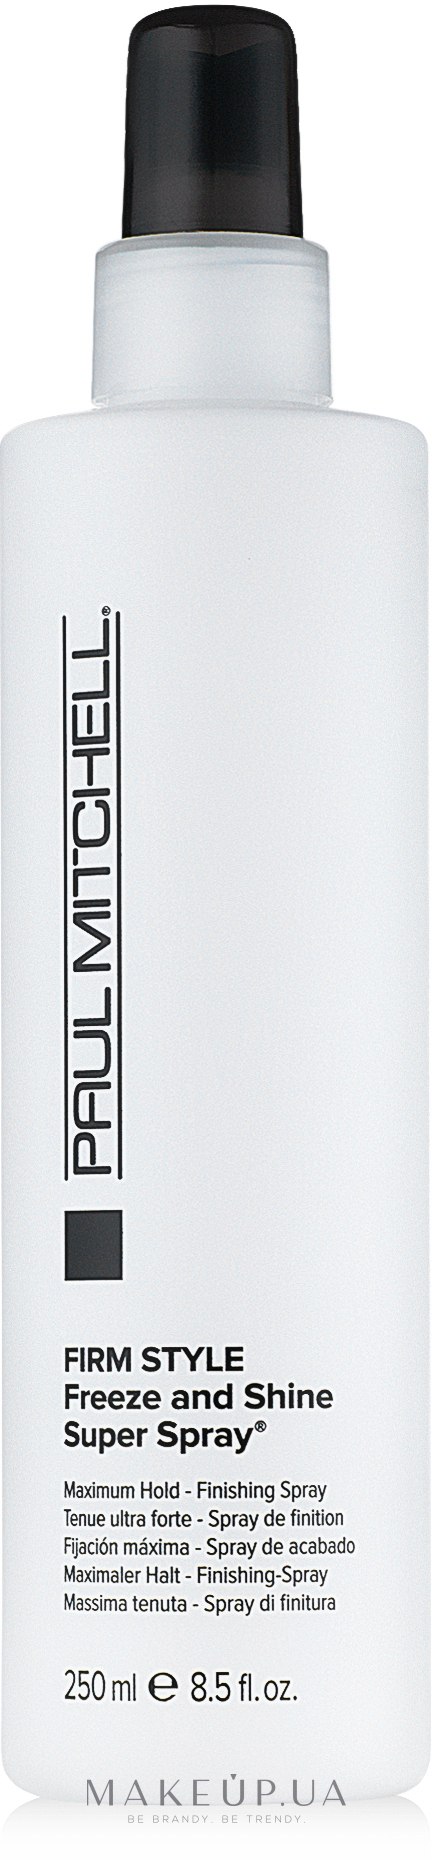 Спрей для укладки сильной фиксации "Заморозка и блеск" - Paul Mitchell Firm Style Freeze & Shine Super Spray — фото 250ml